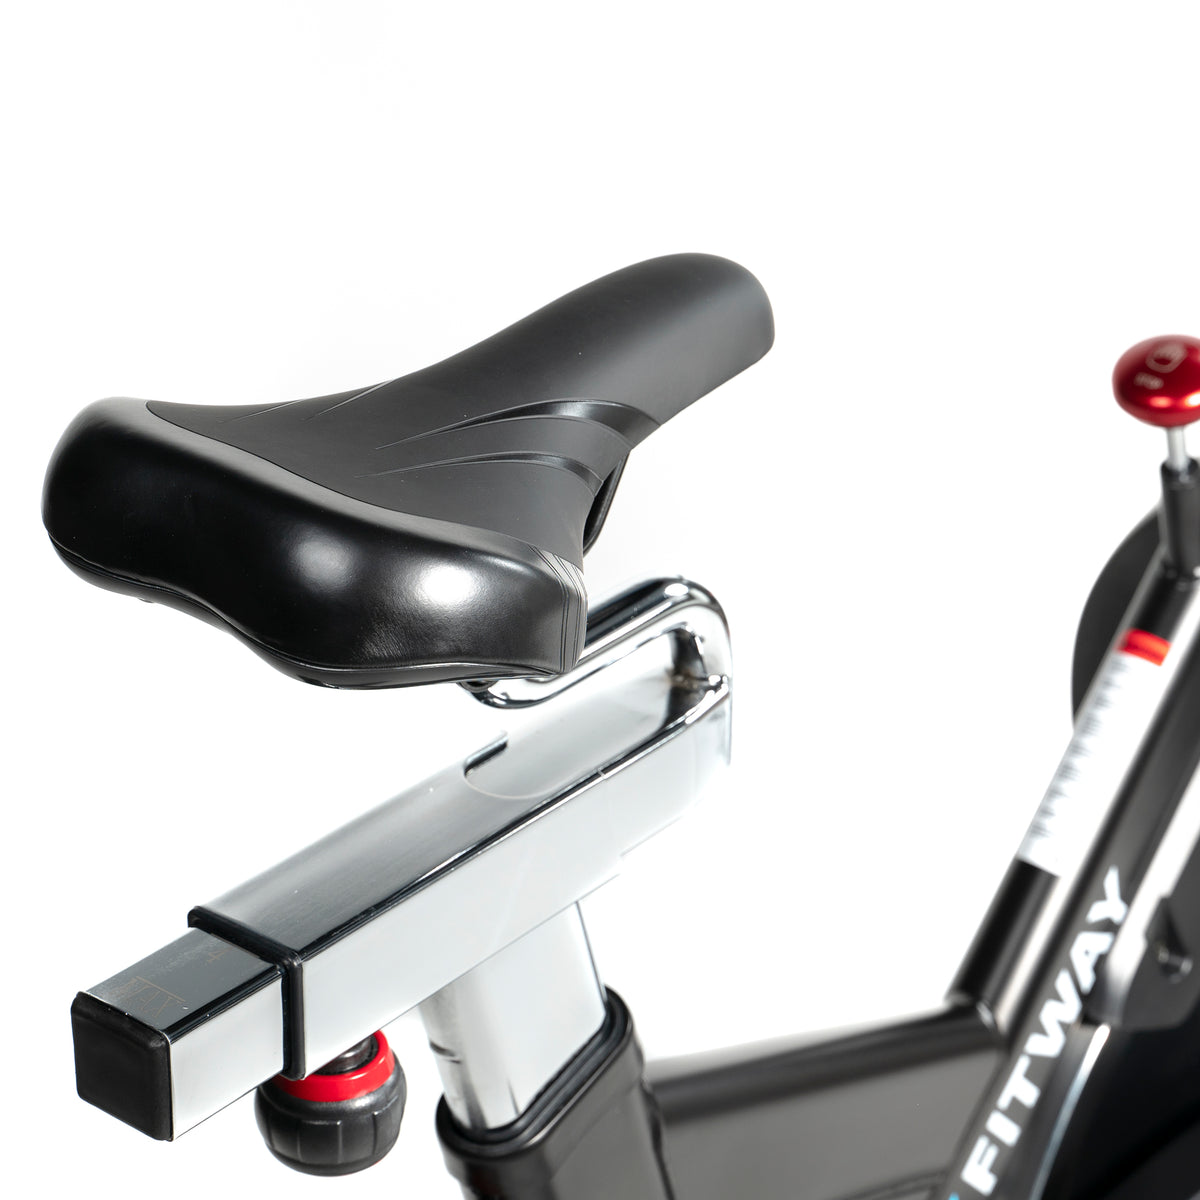 FitWay Equip. 1000IC Indoor Cycle adjustable seat view